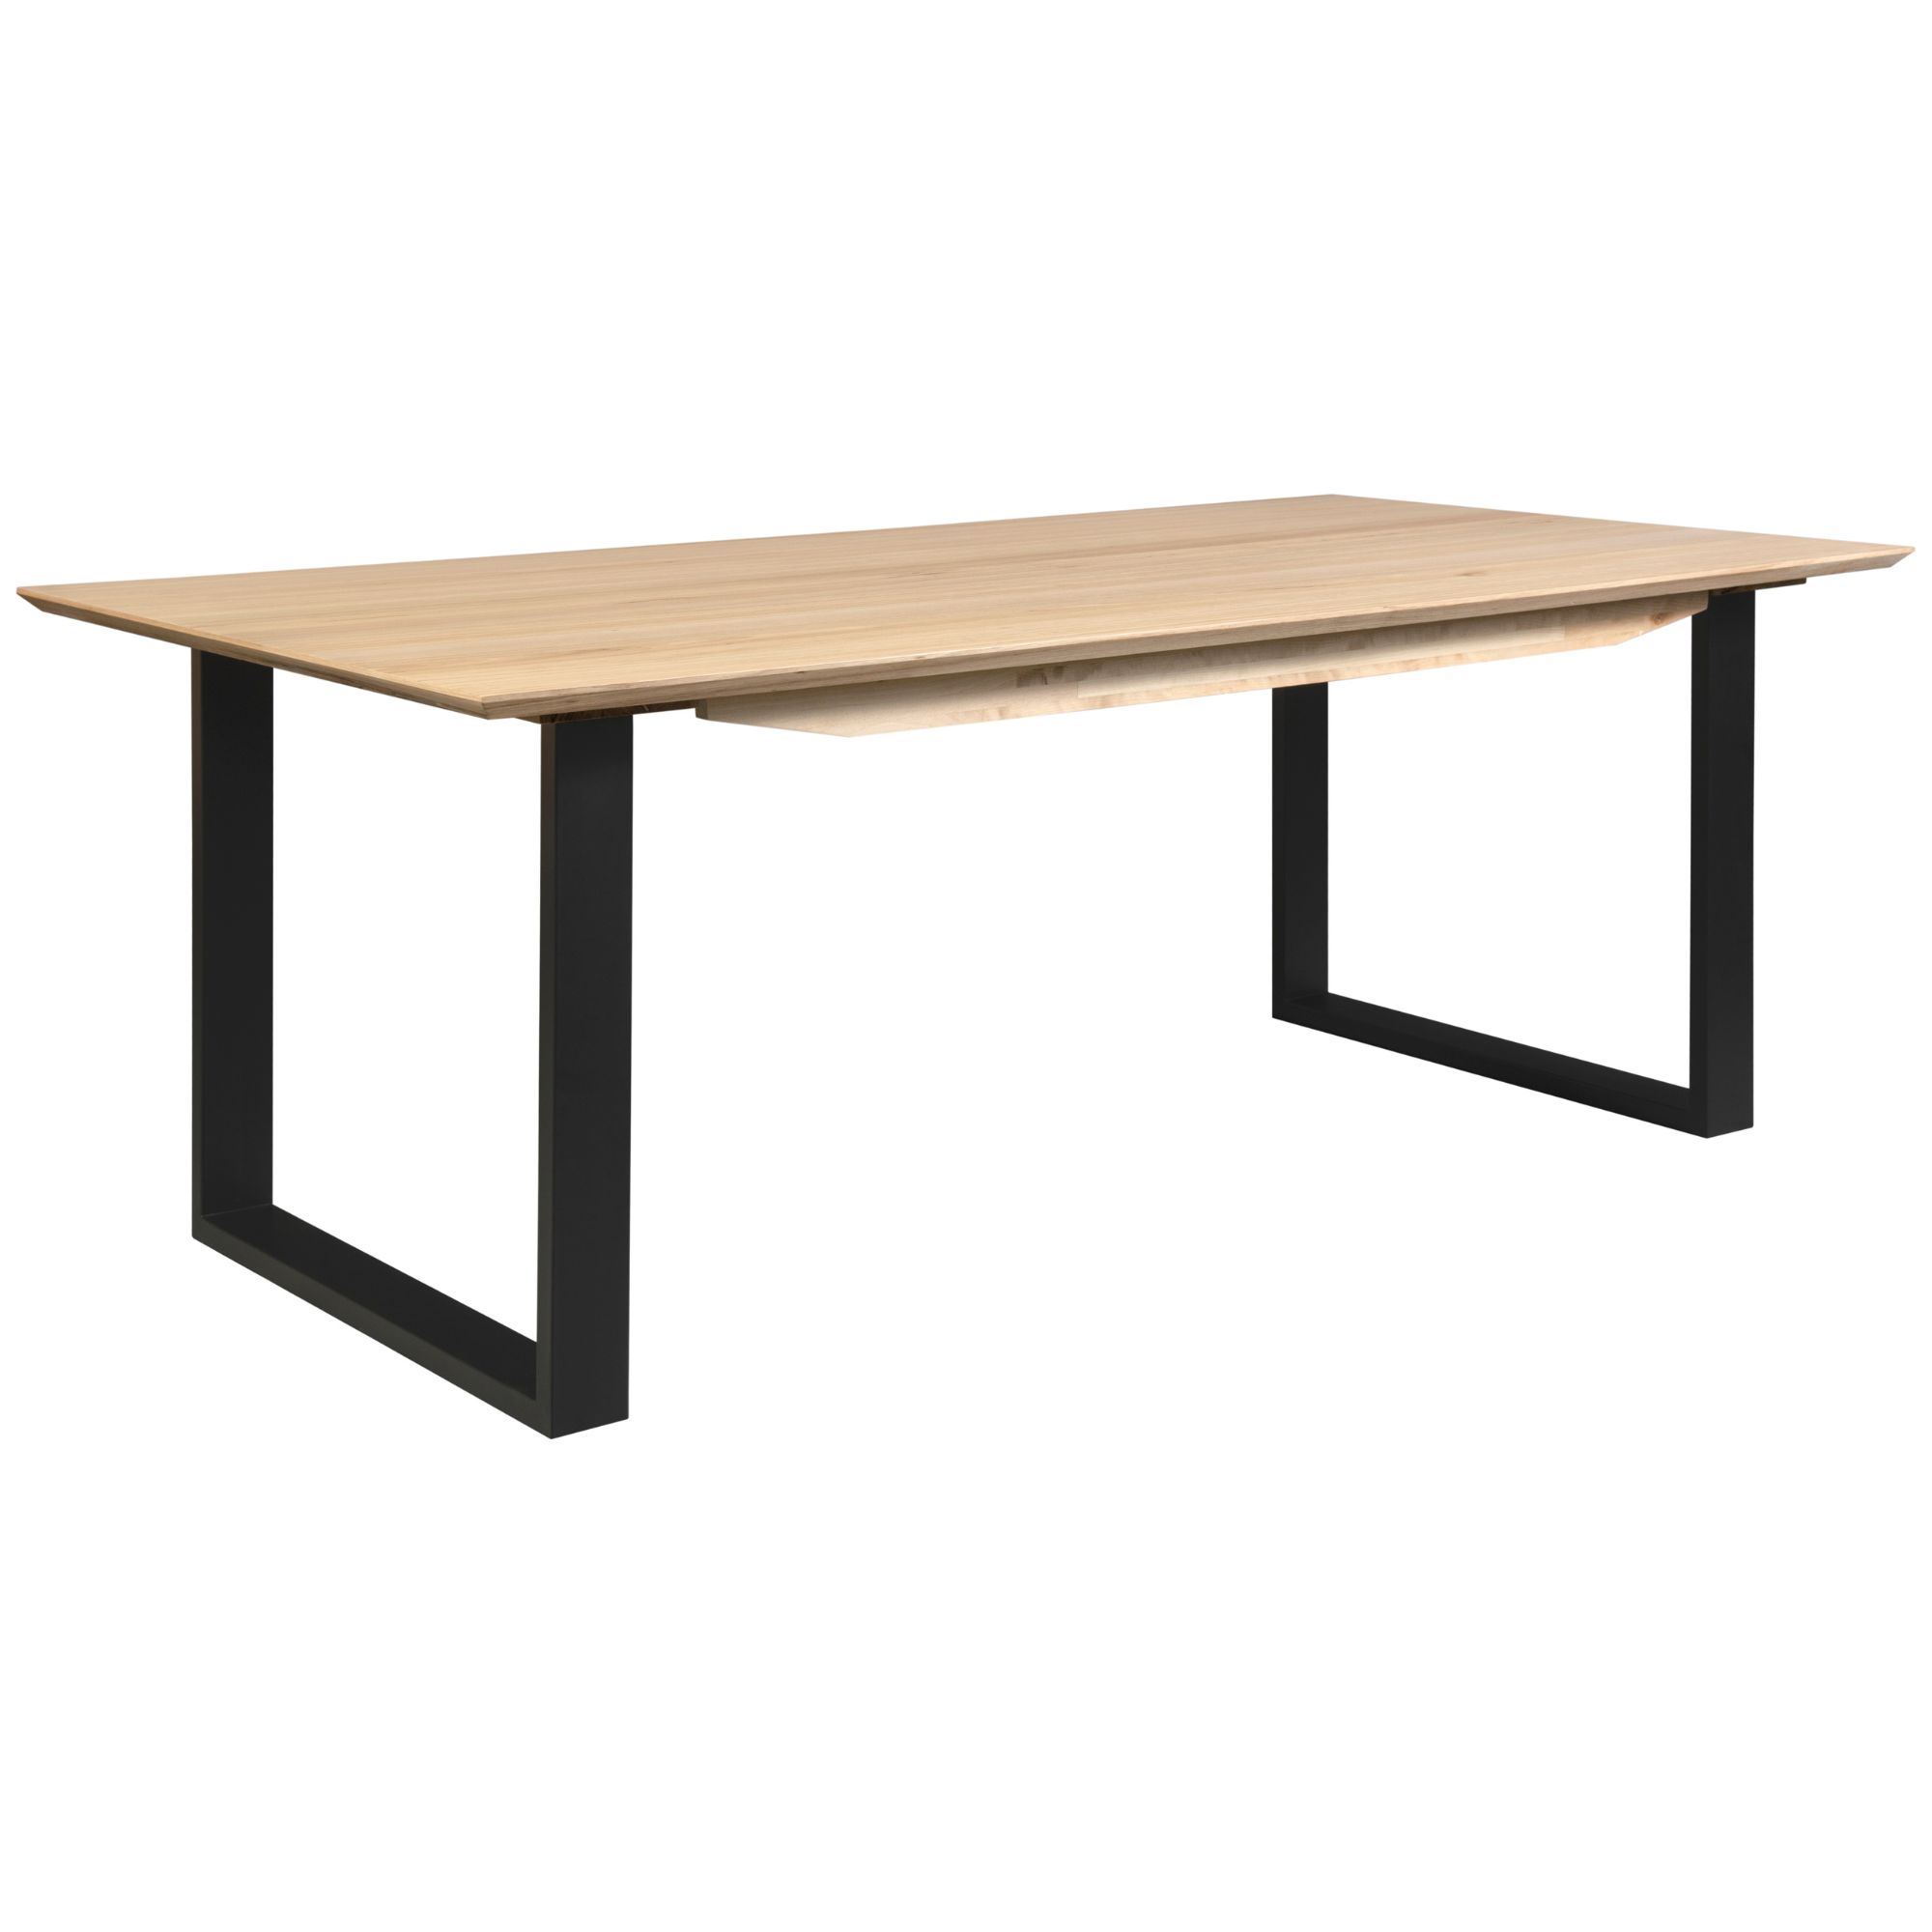 Aconite Dining Table Solid Messmate Timber Wood Black Metal Leg – Natural – 210x105x74 cm